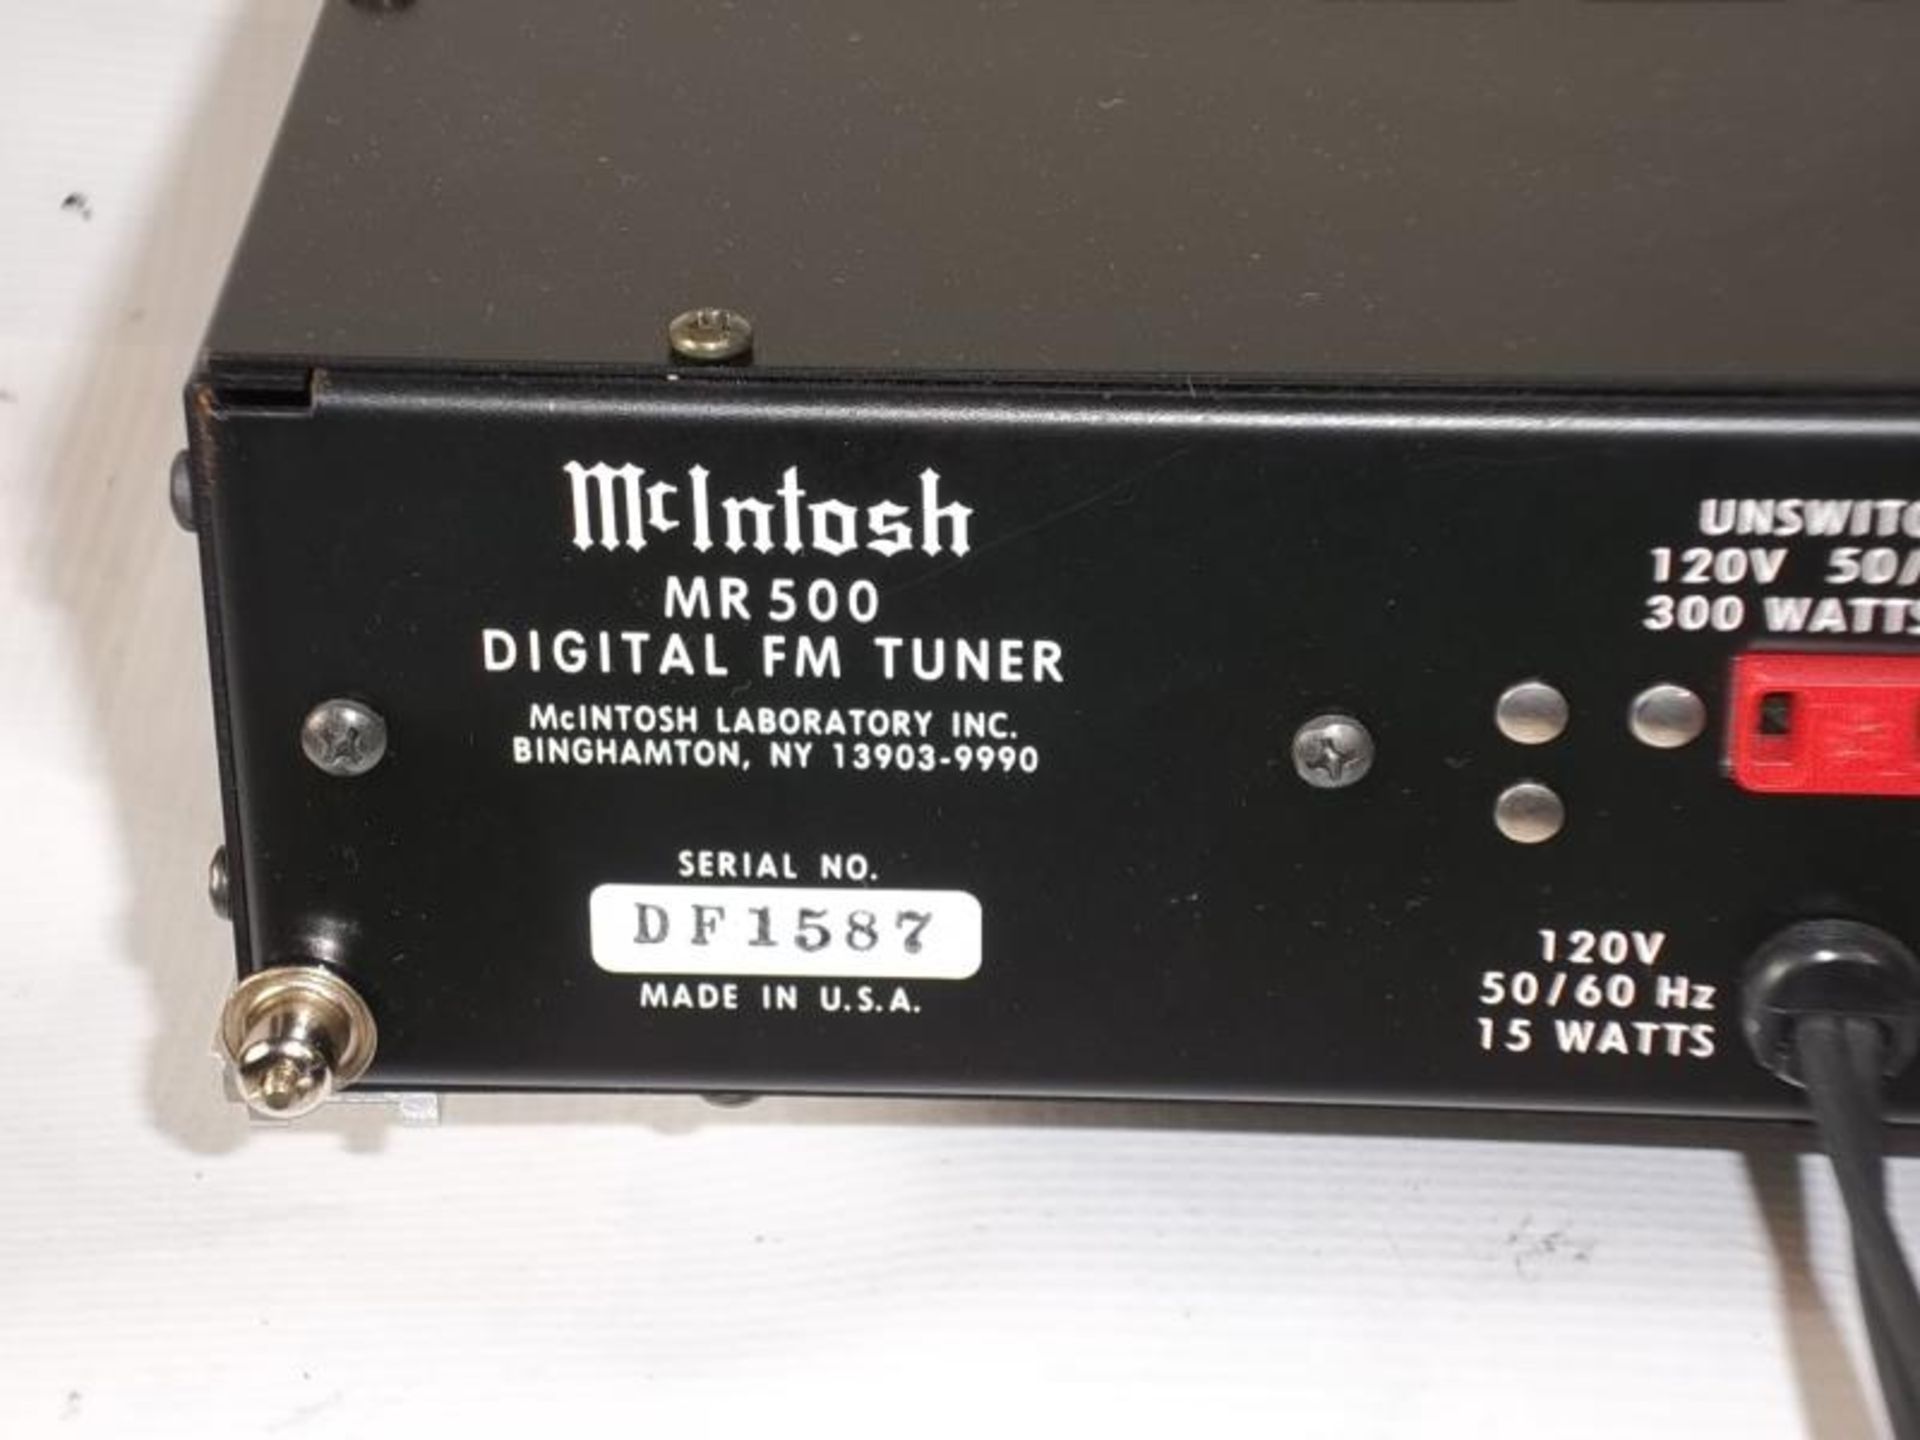 McIntosh MR-500 Digital FM Tuner, no case, in McIntosh cardboard box, s#DF1587 - tested - powers up - Image 8 of 9